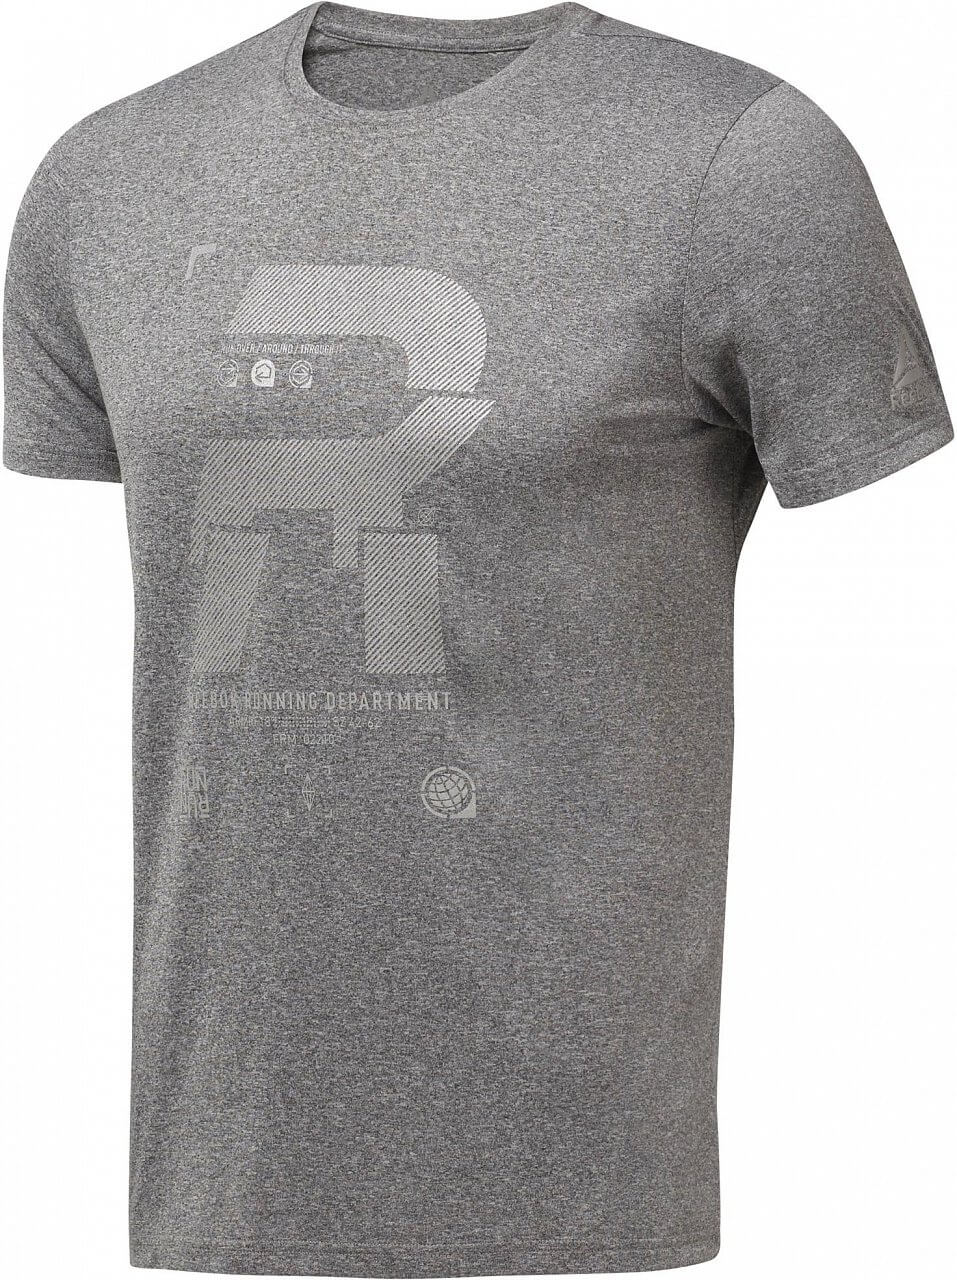 Pánské běžecké tričko Reebok Running Reflective Tee